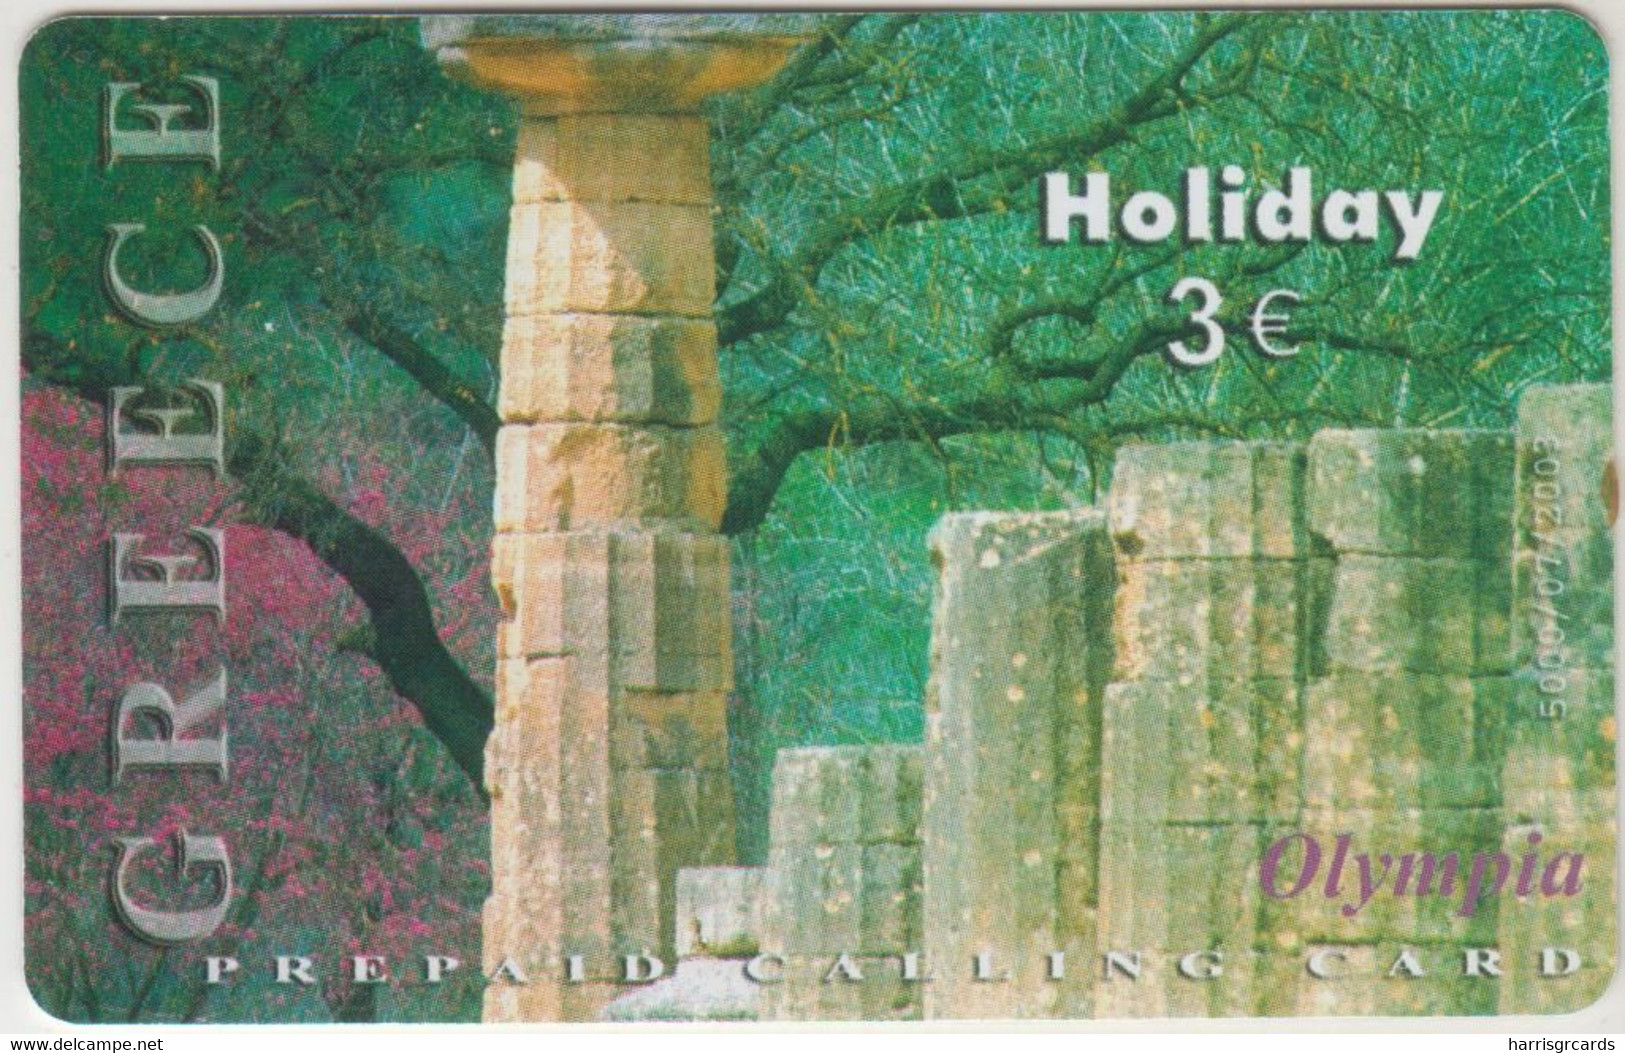 GREECE - Holiday Greece ,Olympia, AMIMEX Prepaid Card ,3 €, Tirage 5.000, Used - Grèce